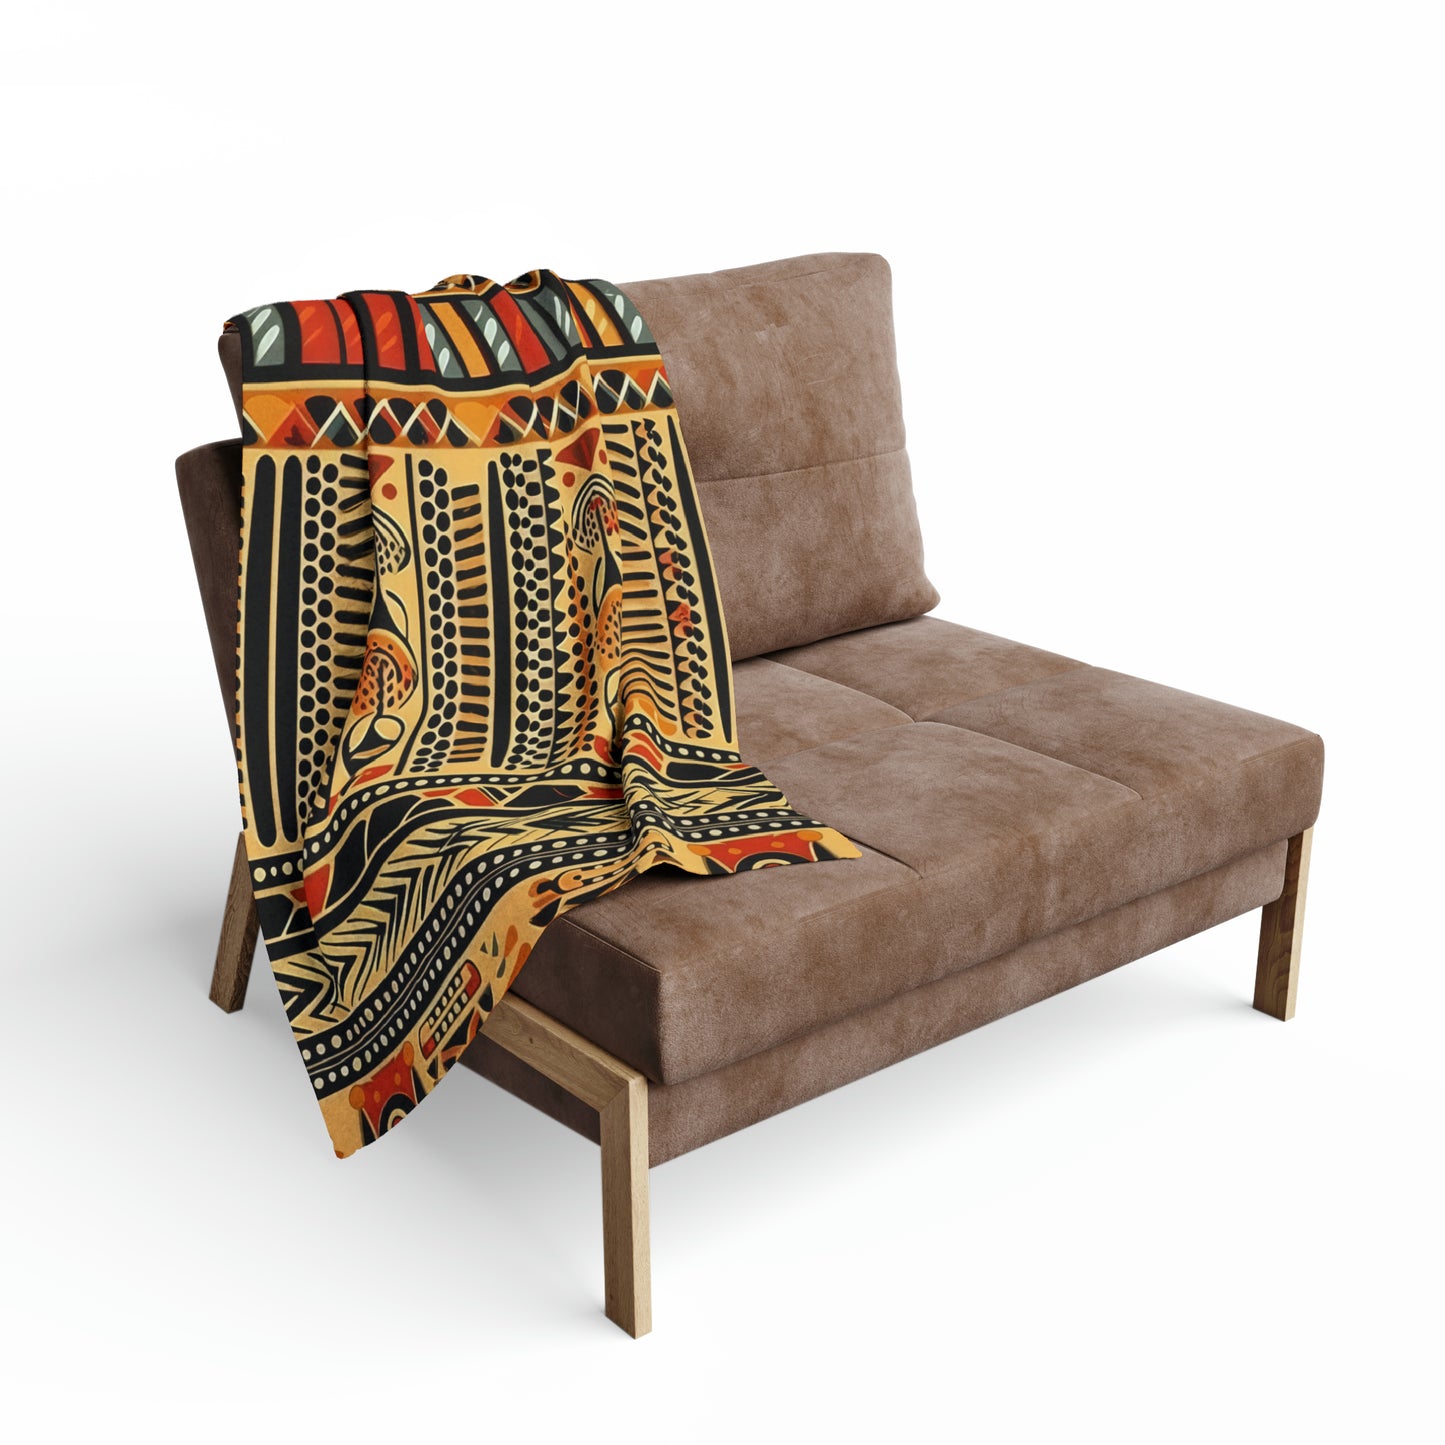 Copy of Fleece Blanket - African Print Bogolan Mali